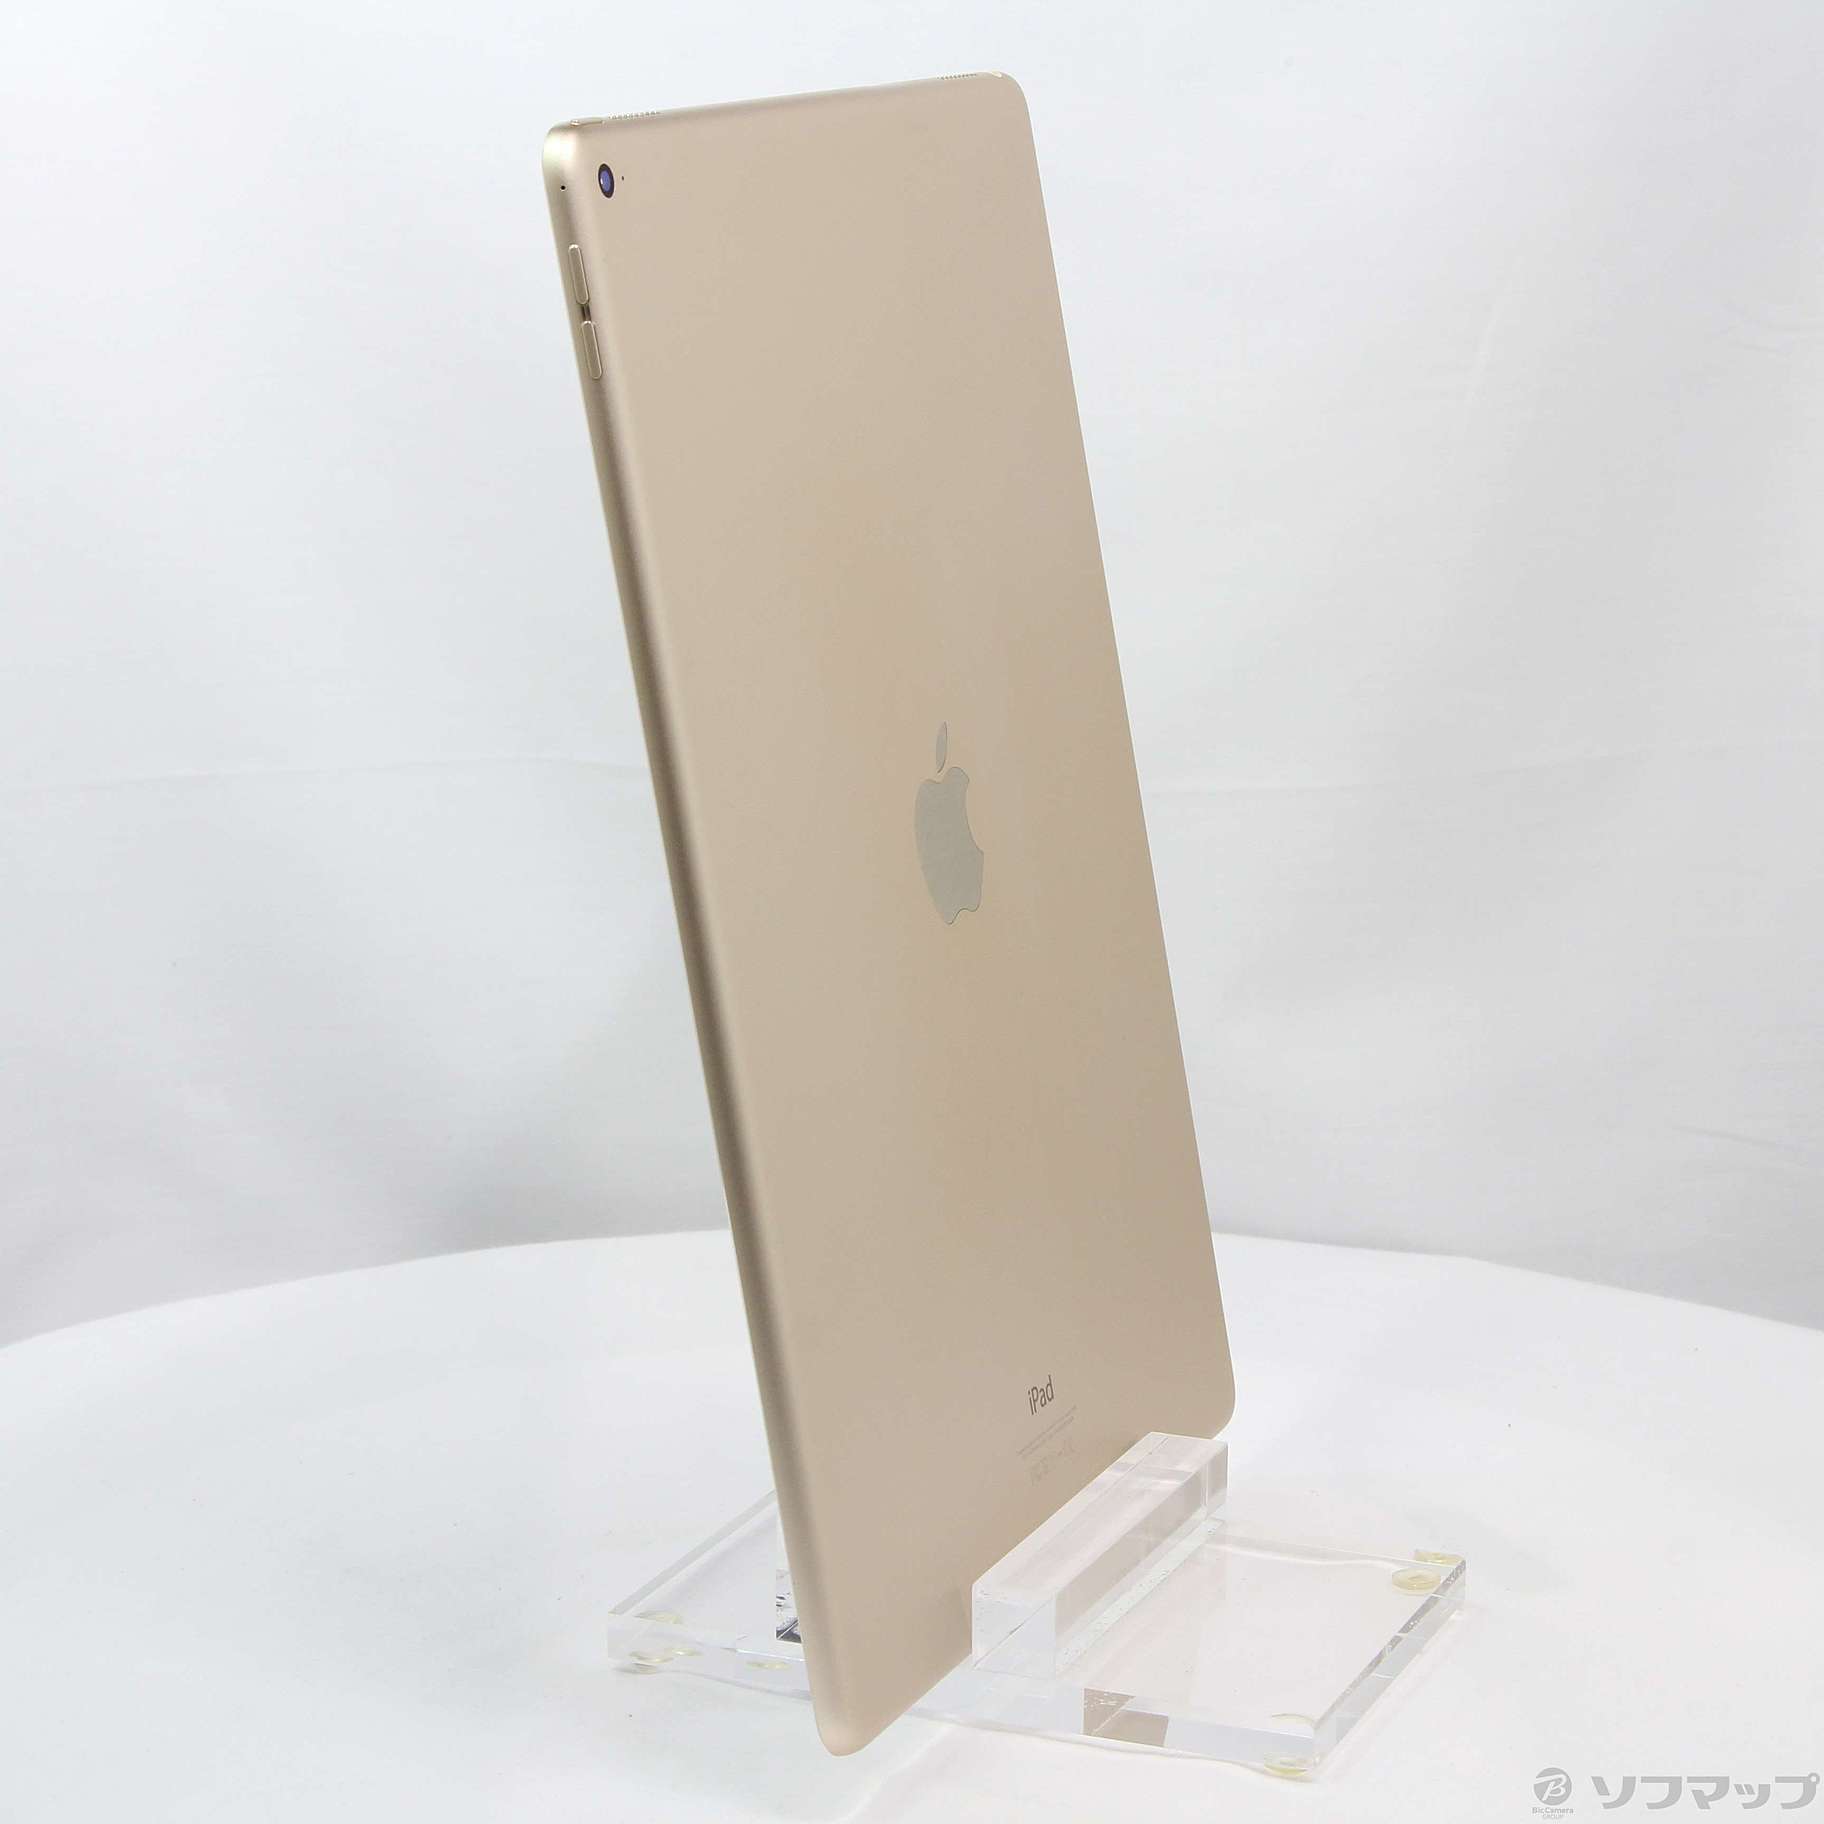 iPad pro 12.9 Wifi gold 128g